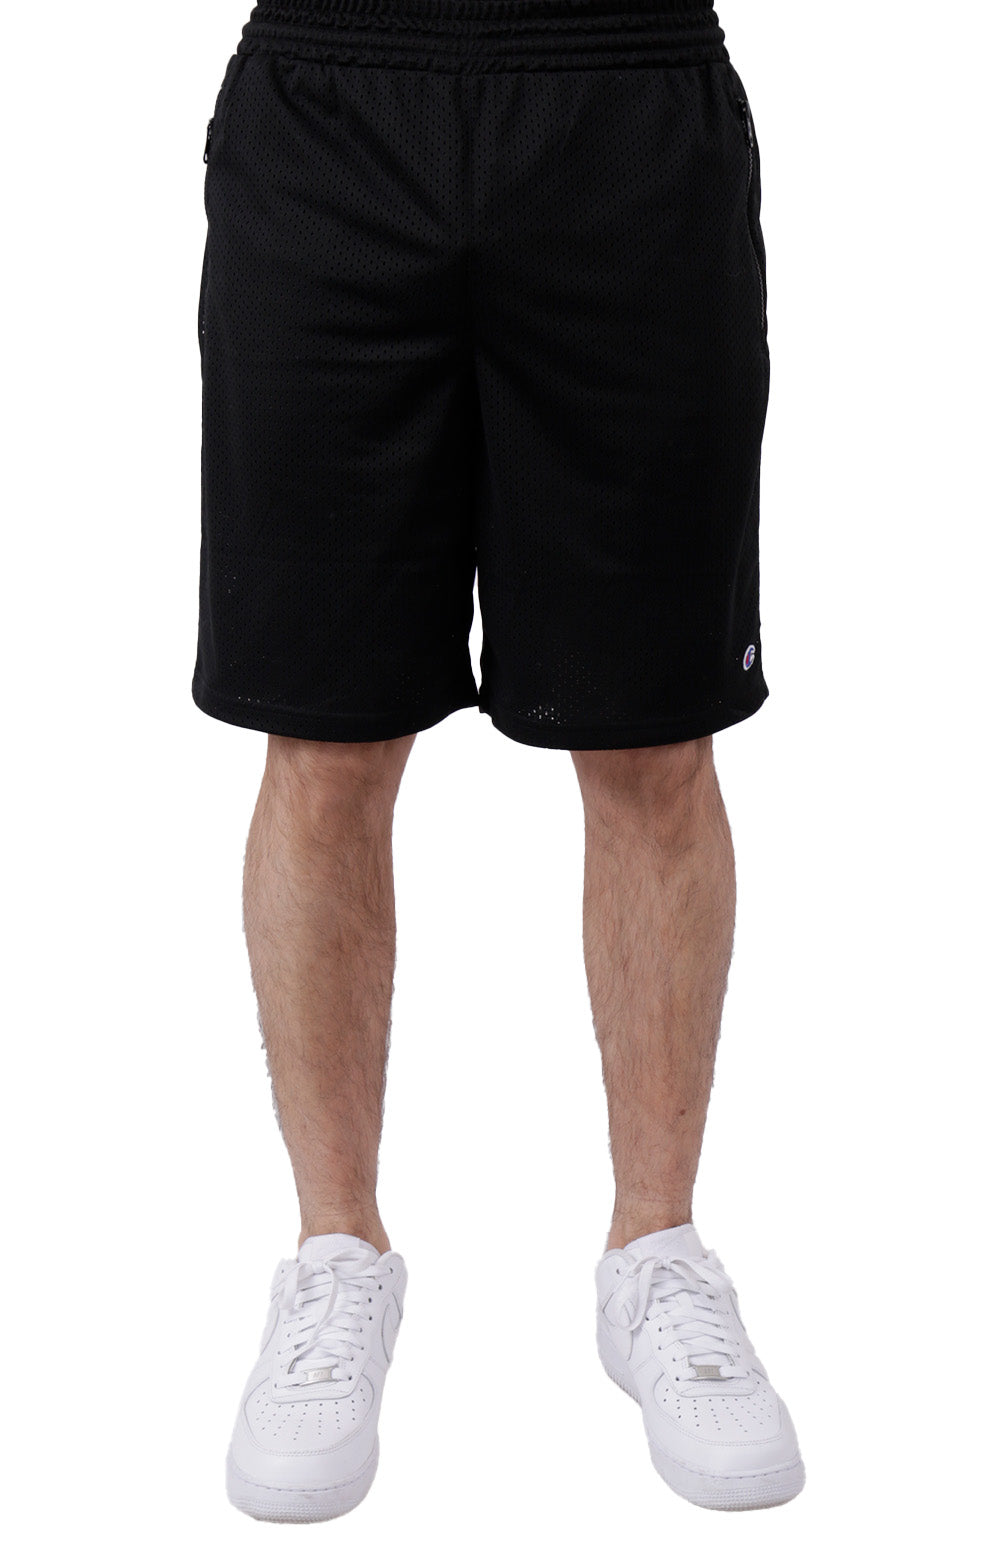 9" Mesh Basketball Shorts - Black